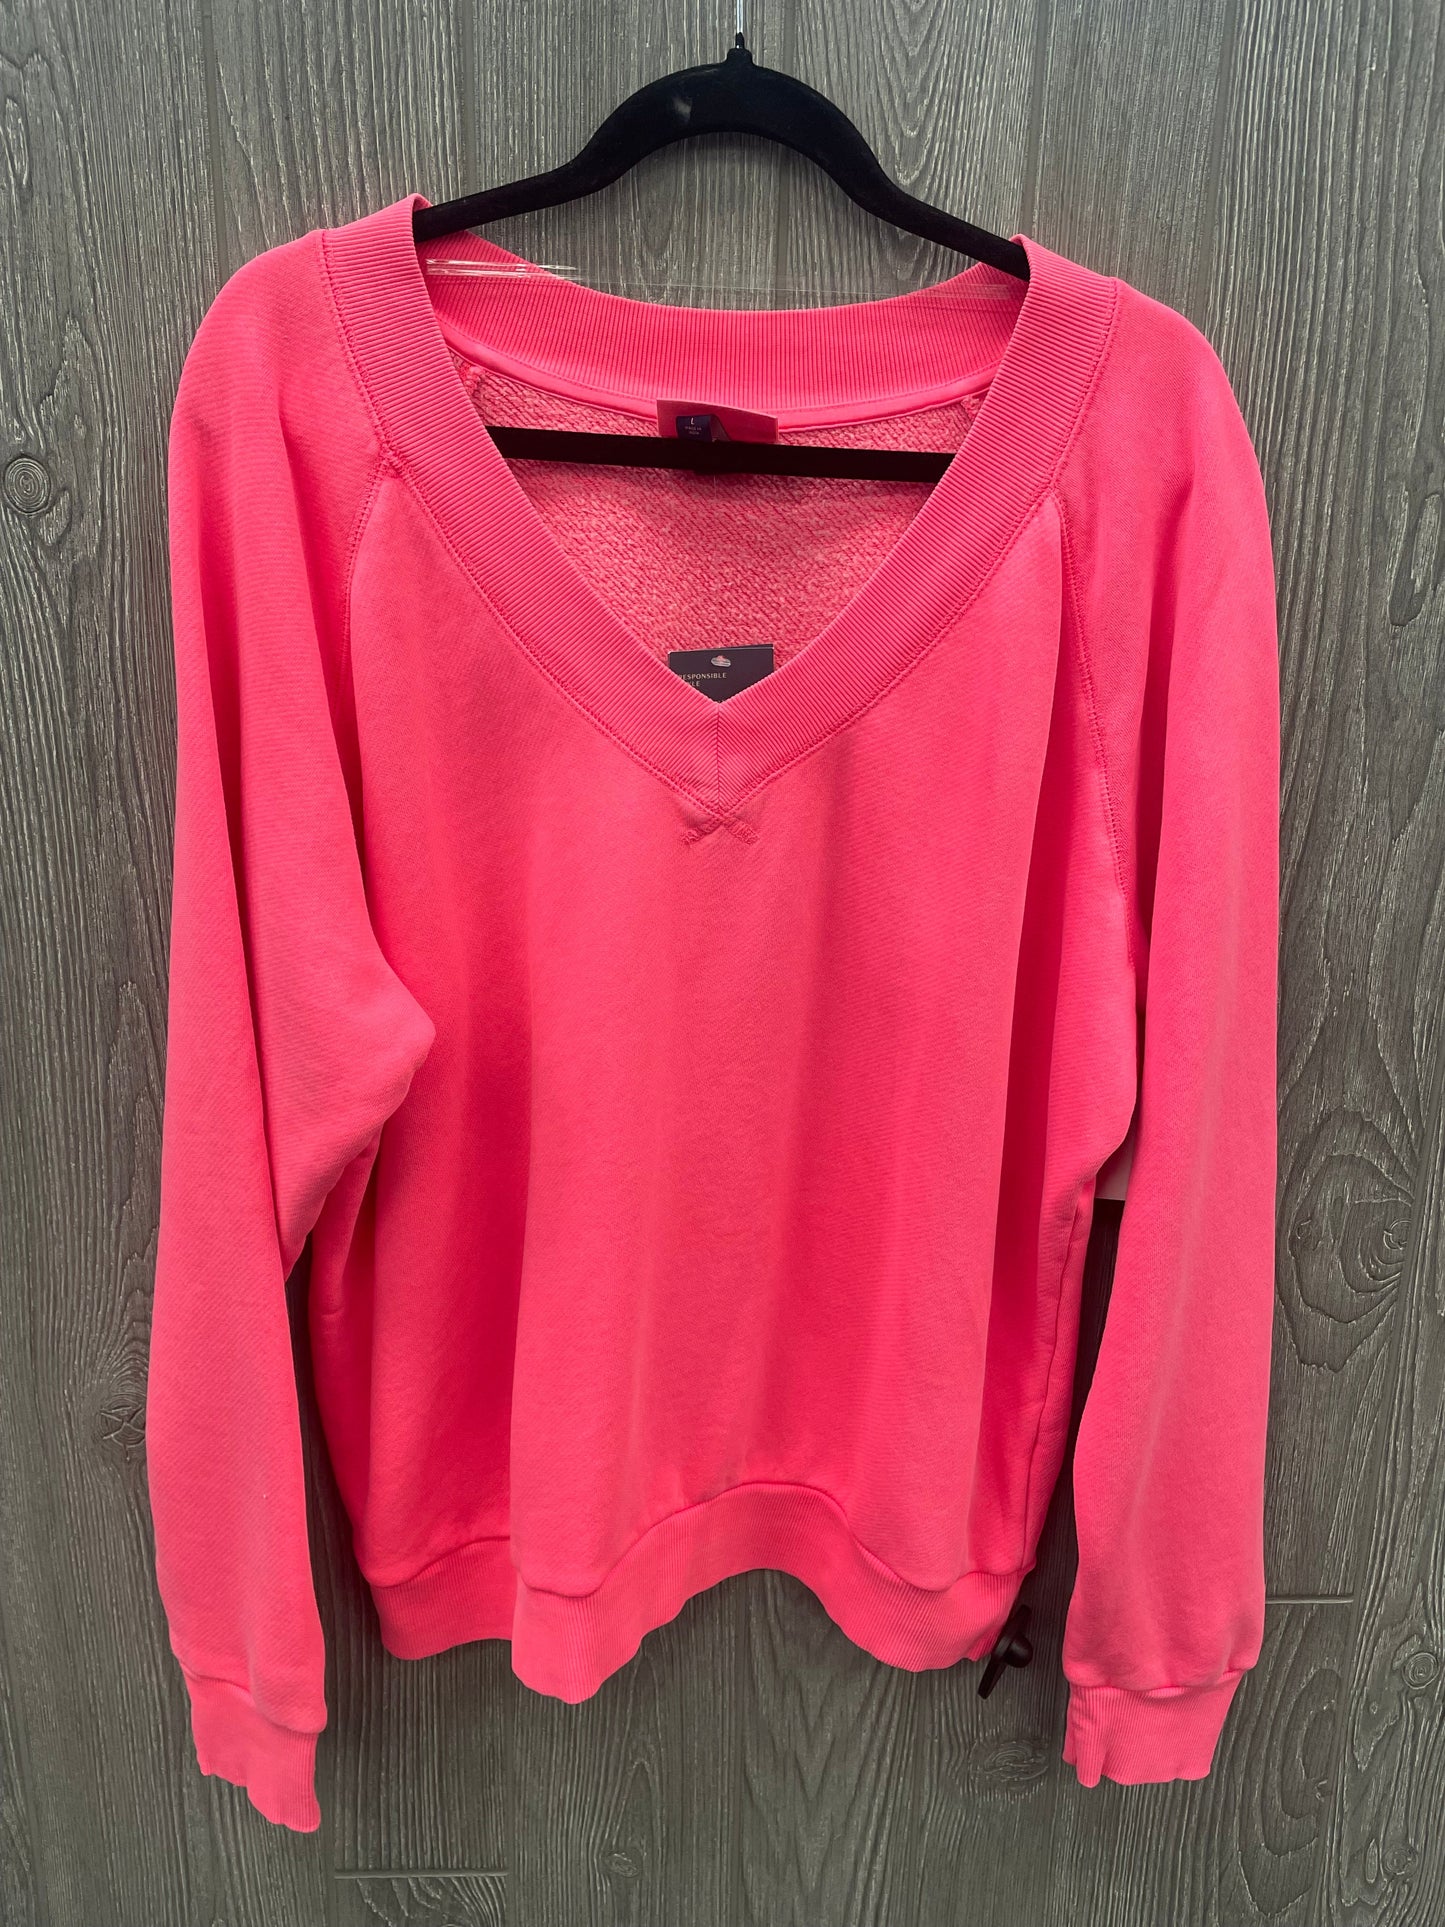 Pink Sweatshirt Crewneck Universal Thread, Size L